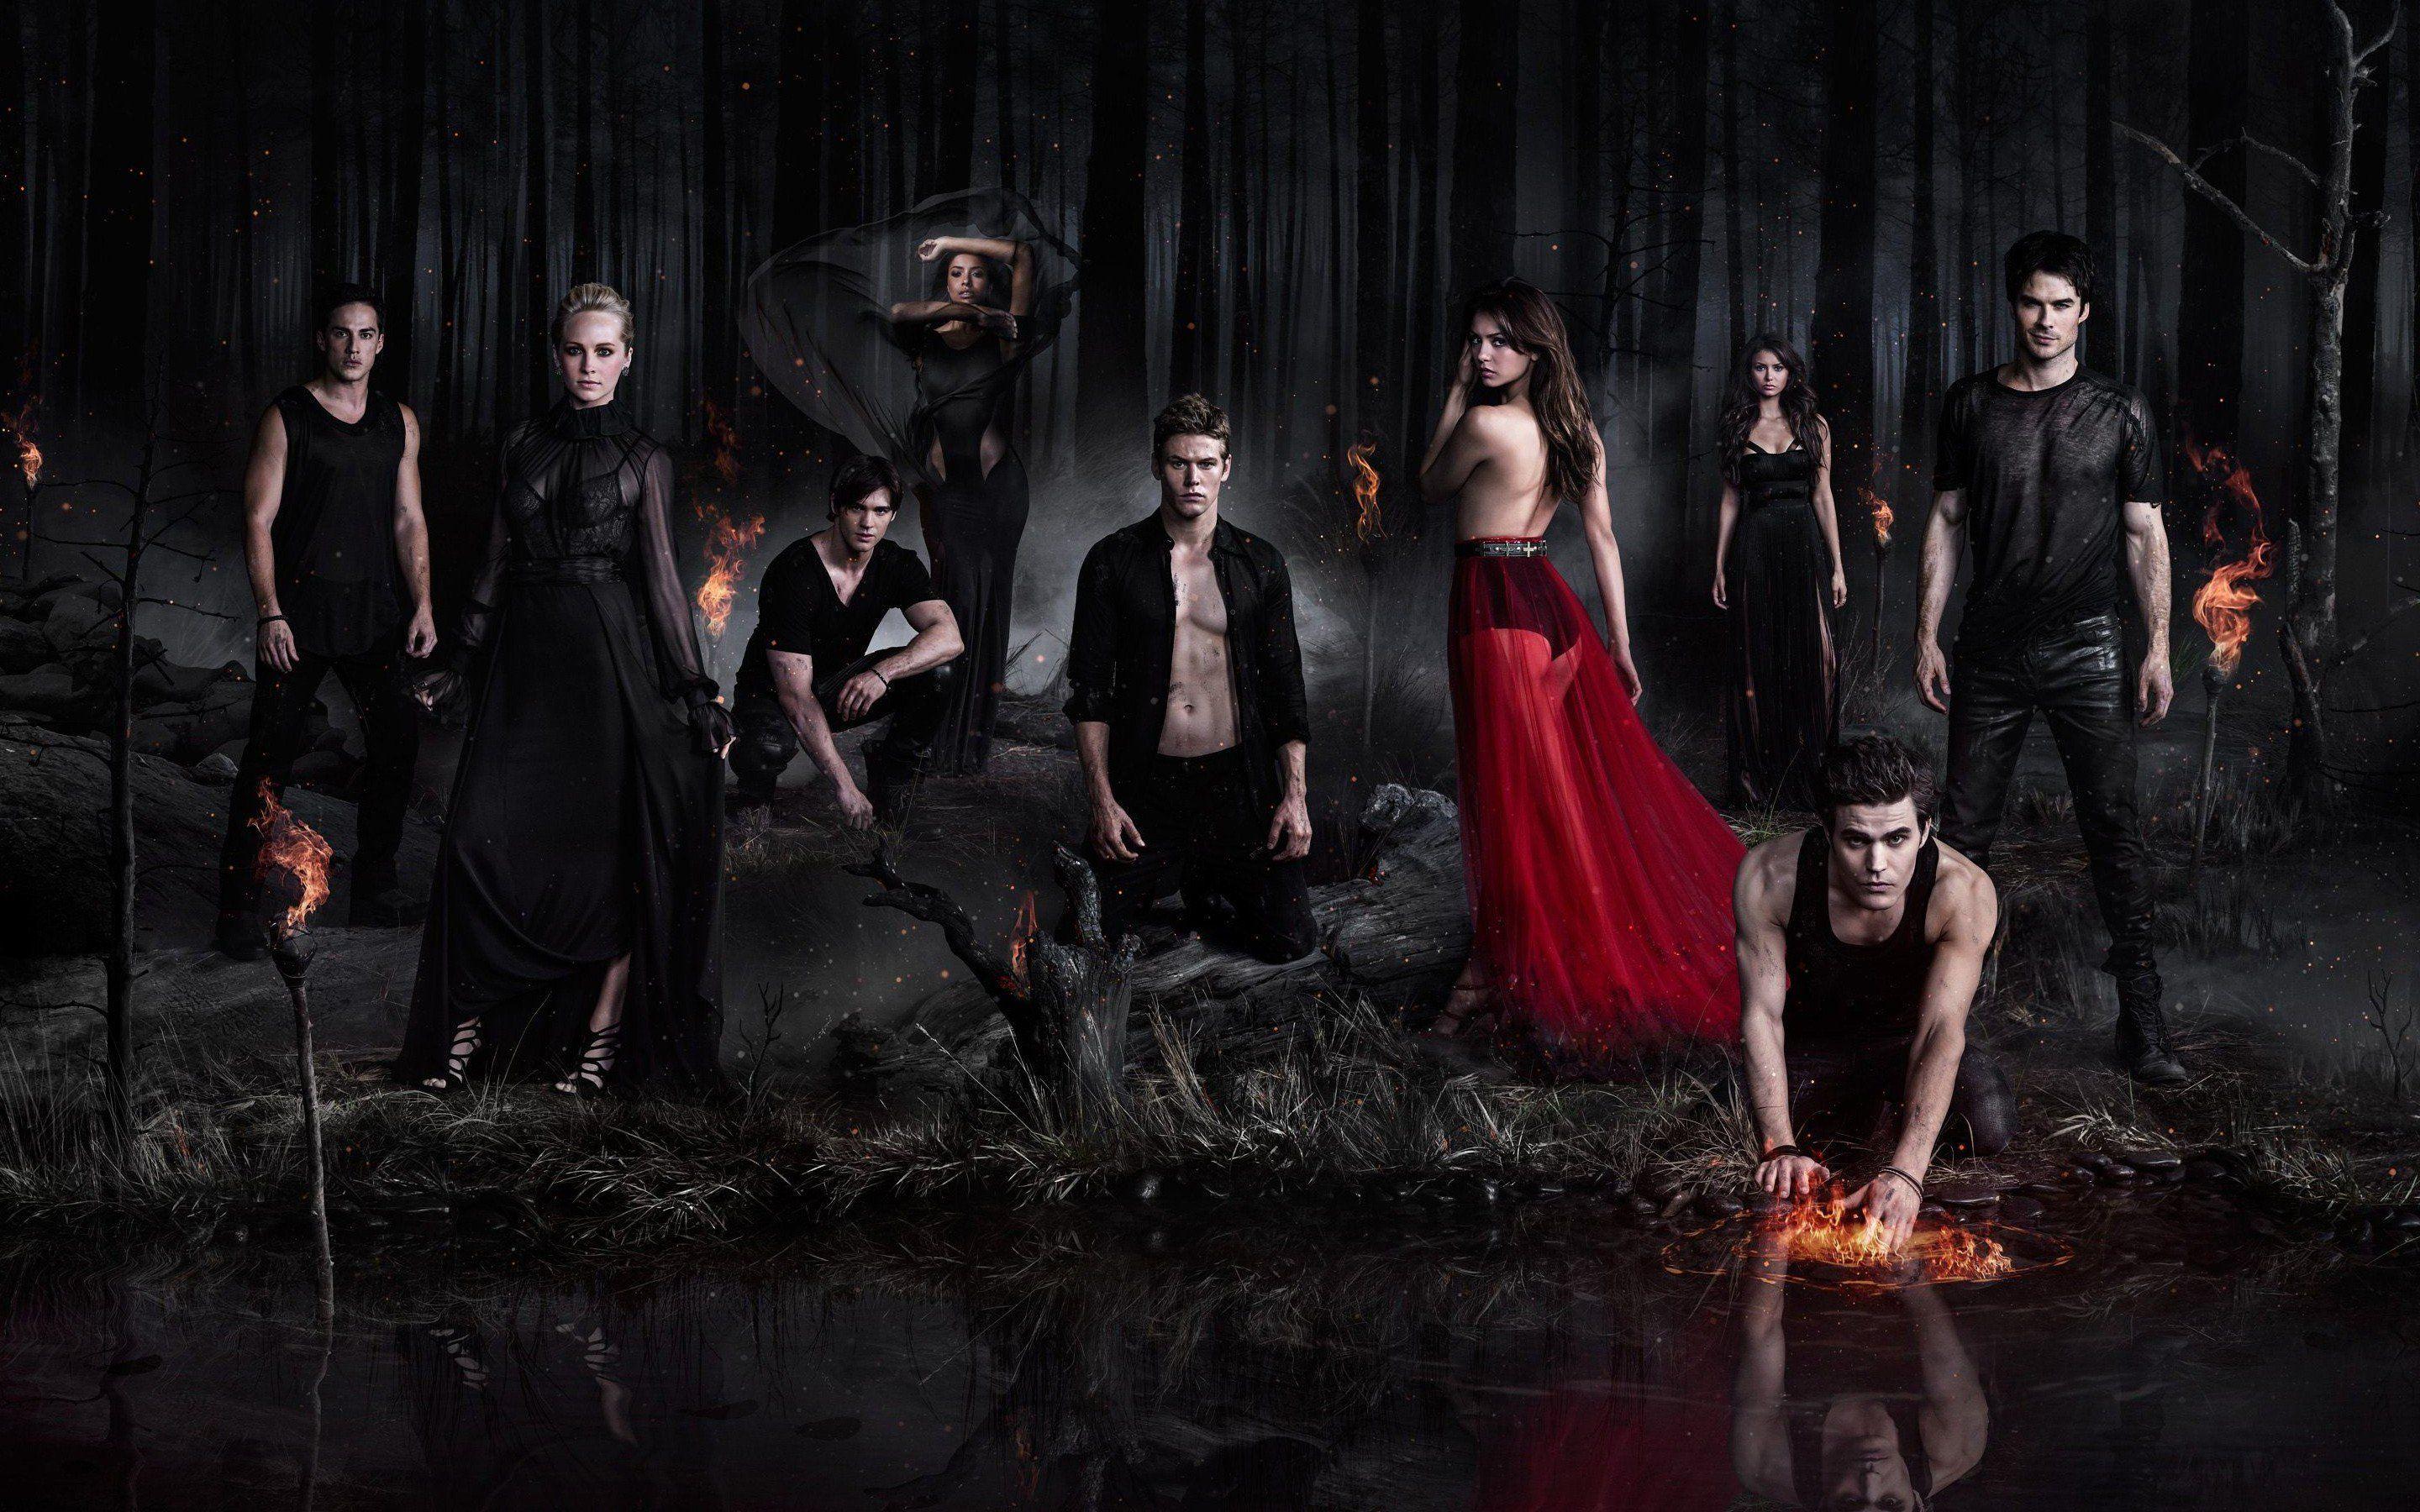 The Vampire Diaries Wallpaper, Image, Background, Photo